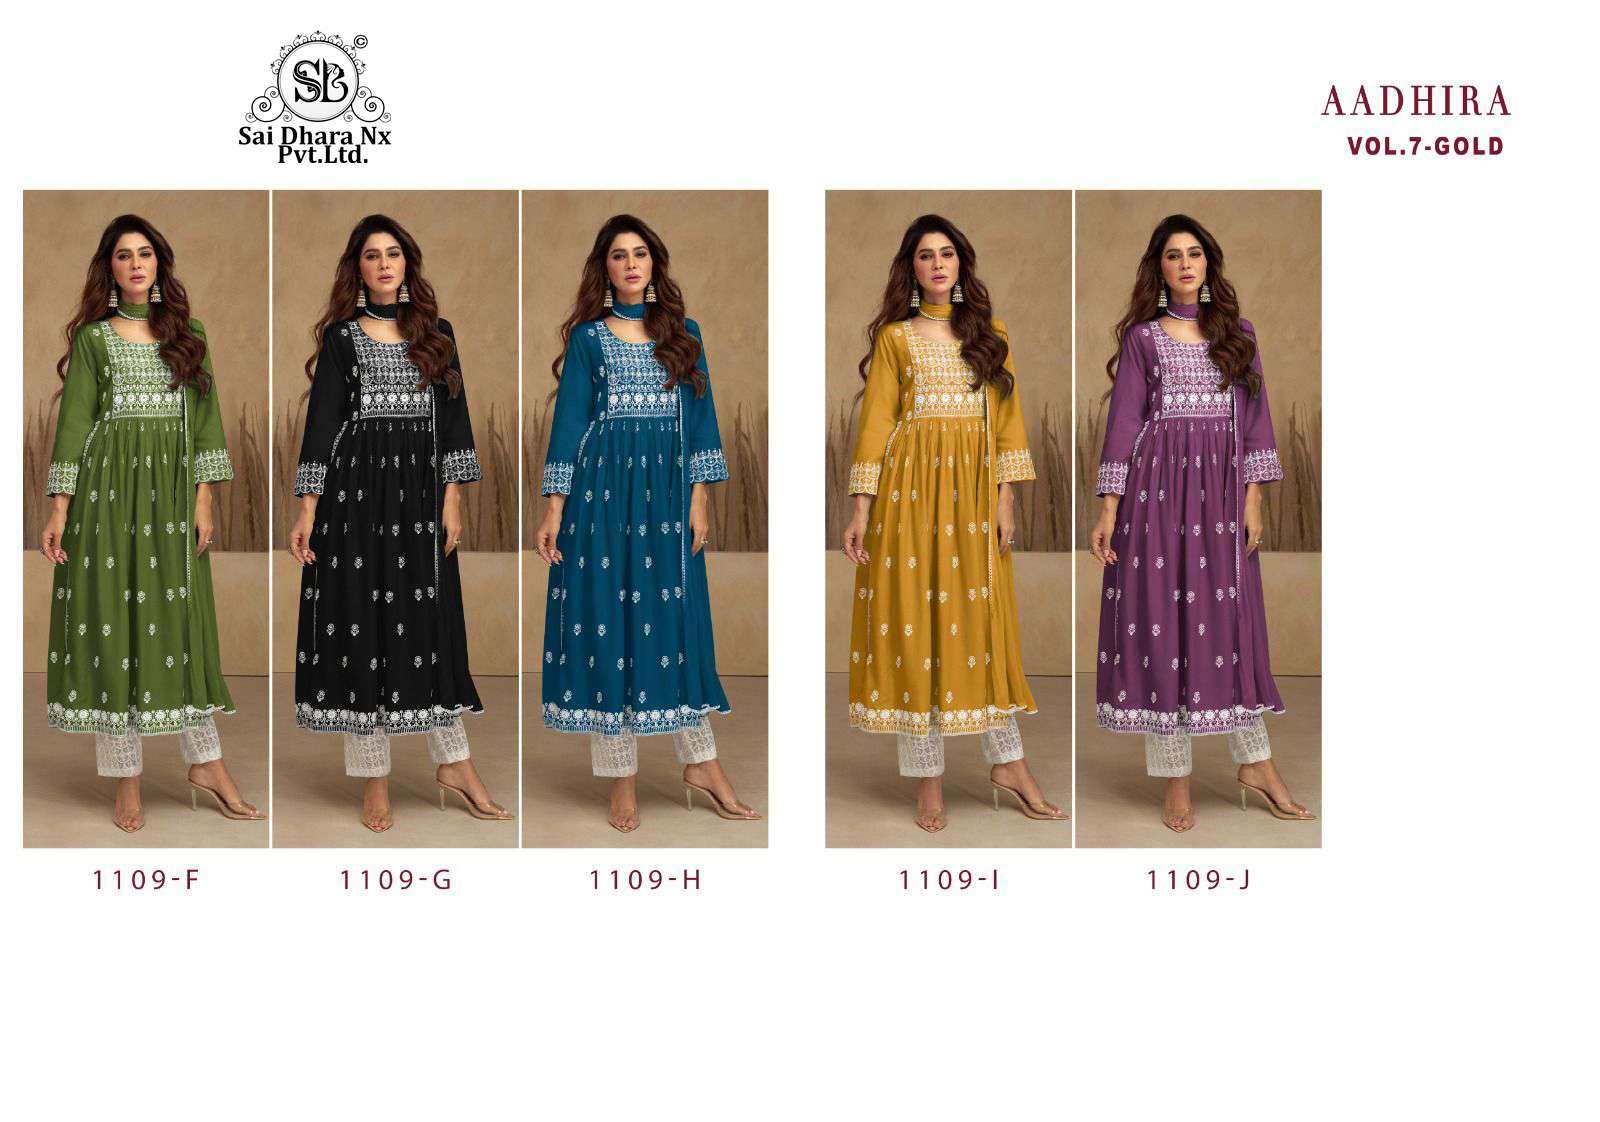 vamika presents nayra style 3 piece suit wholesale shop in surat - SaiDharaNx